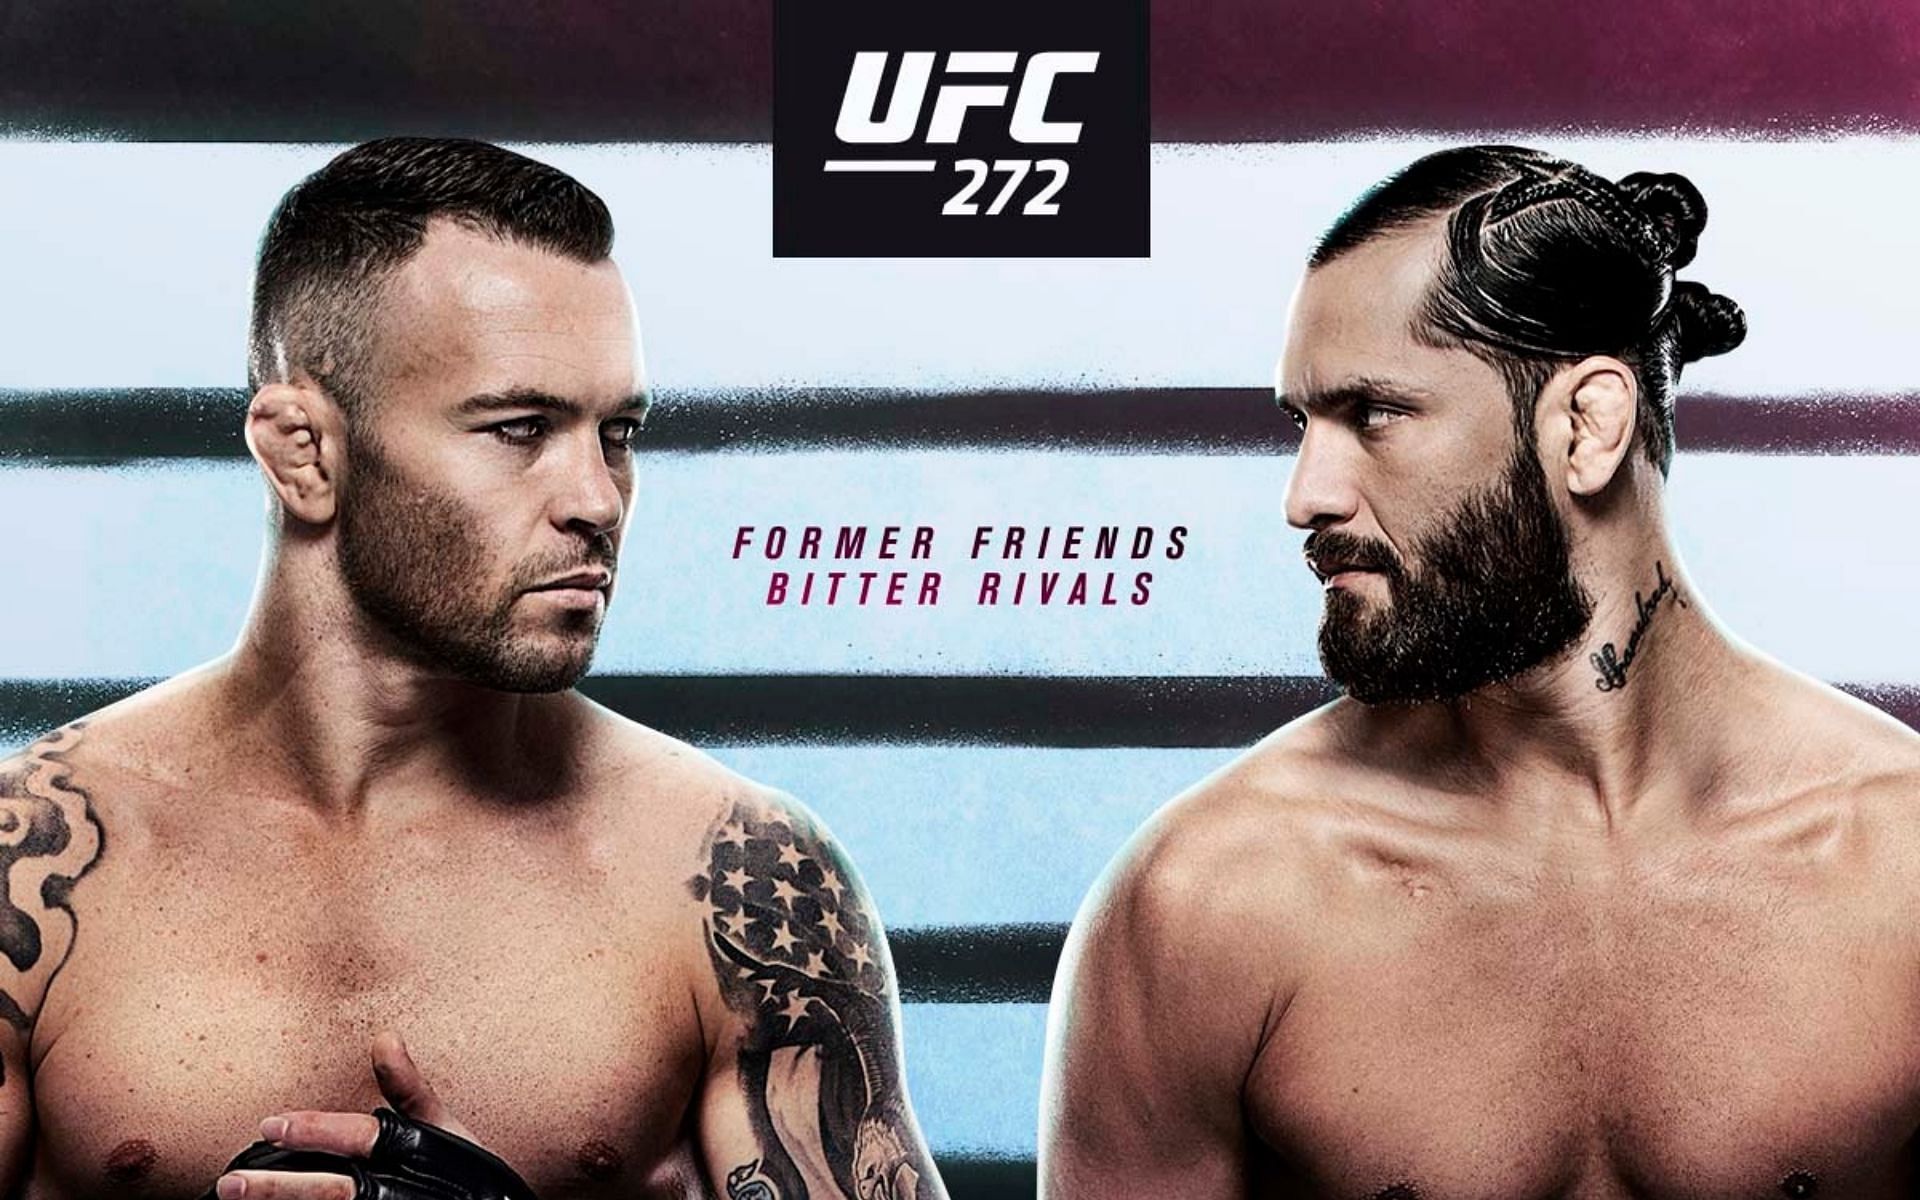 UFC 272 poster via Twitter @UFCFansNZ